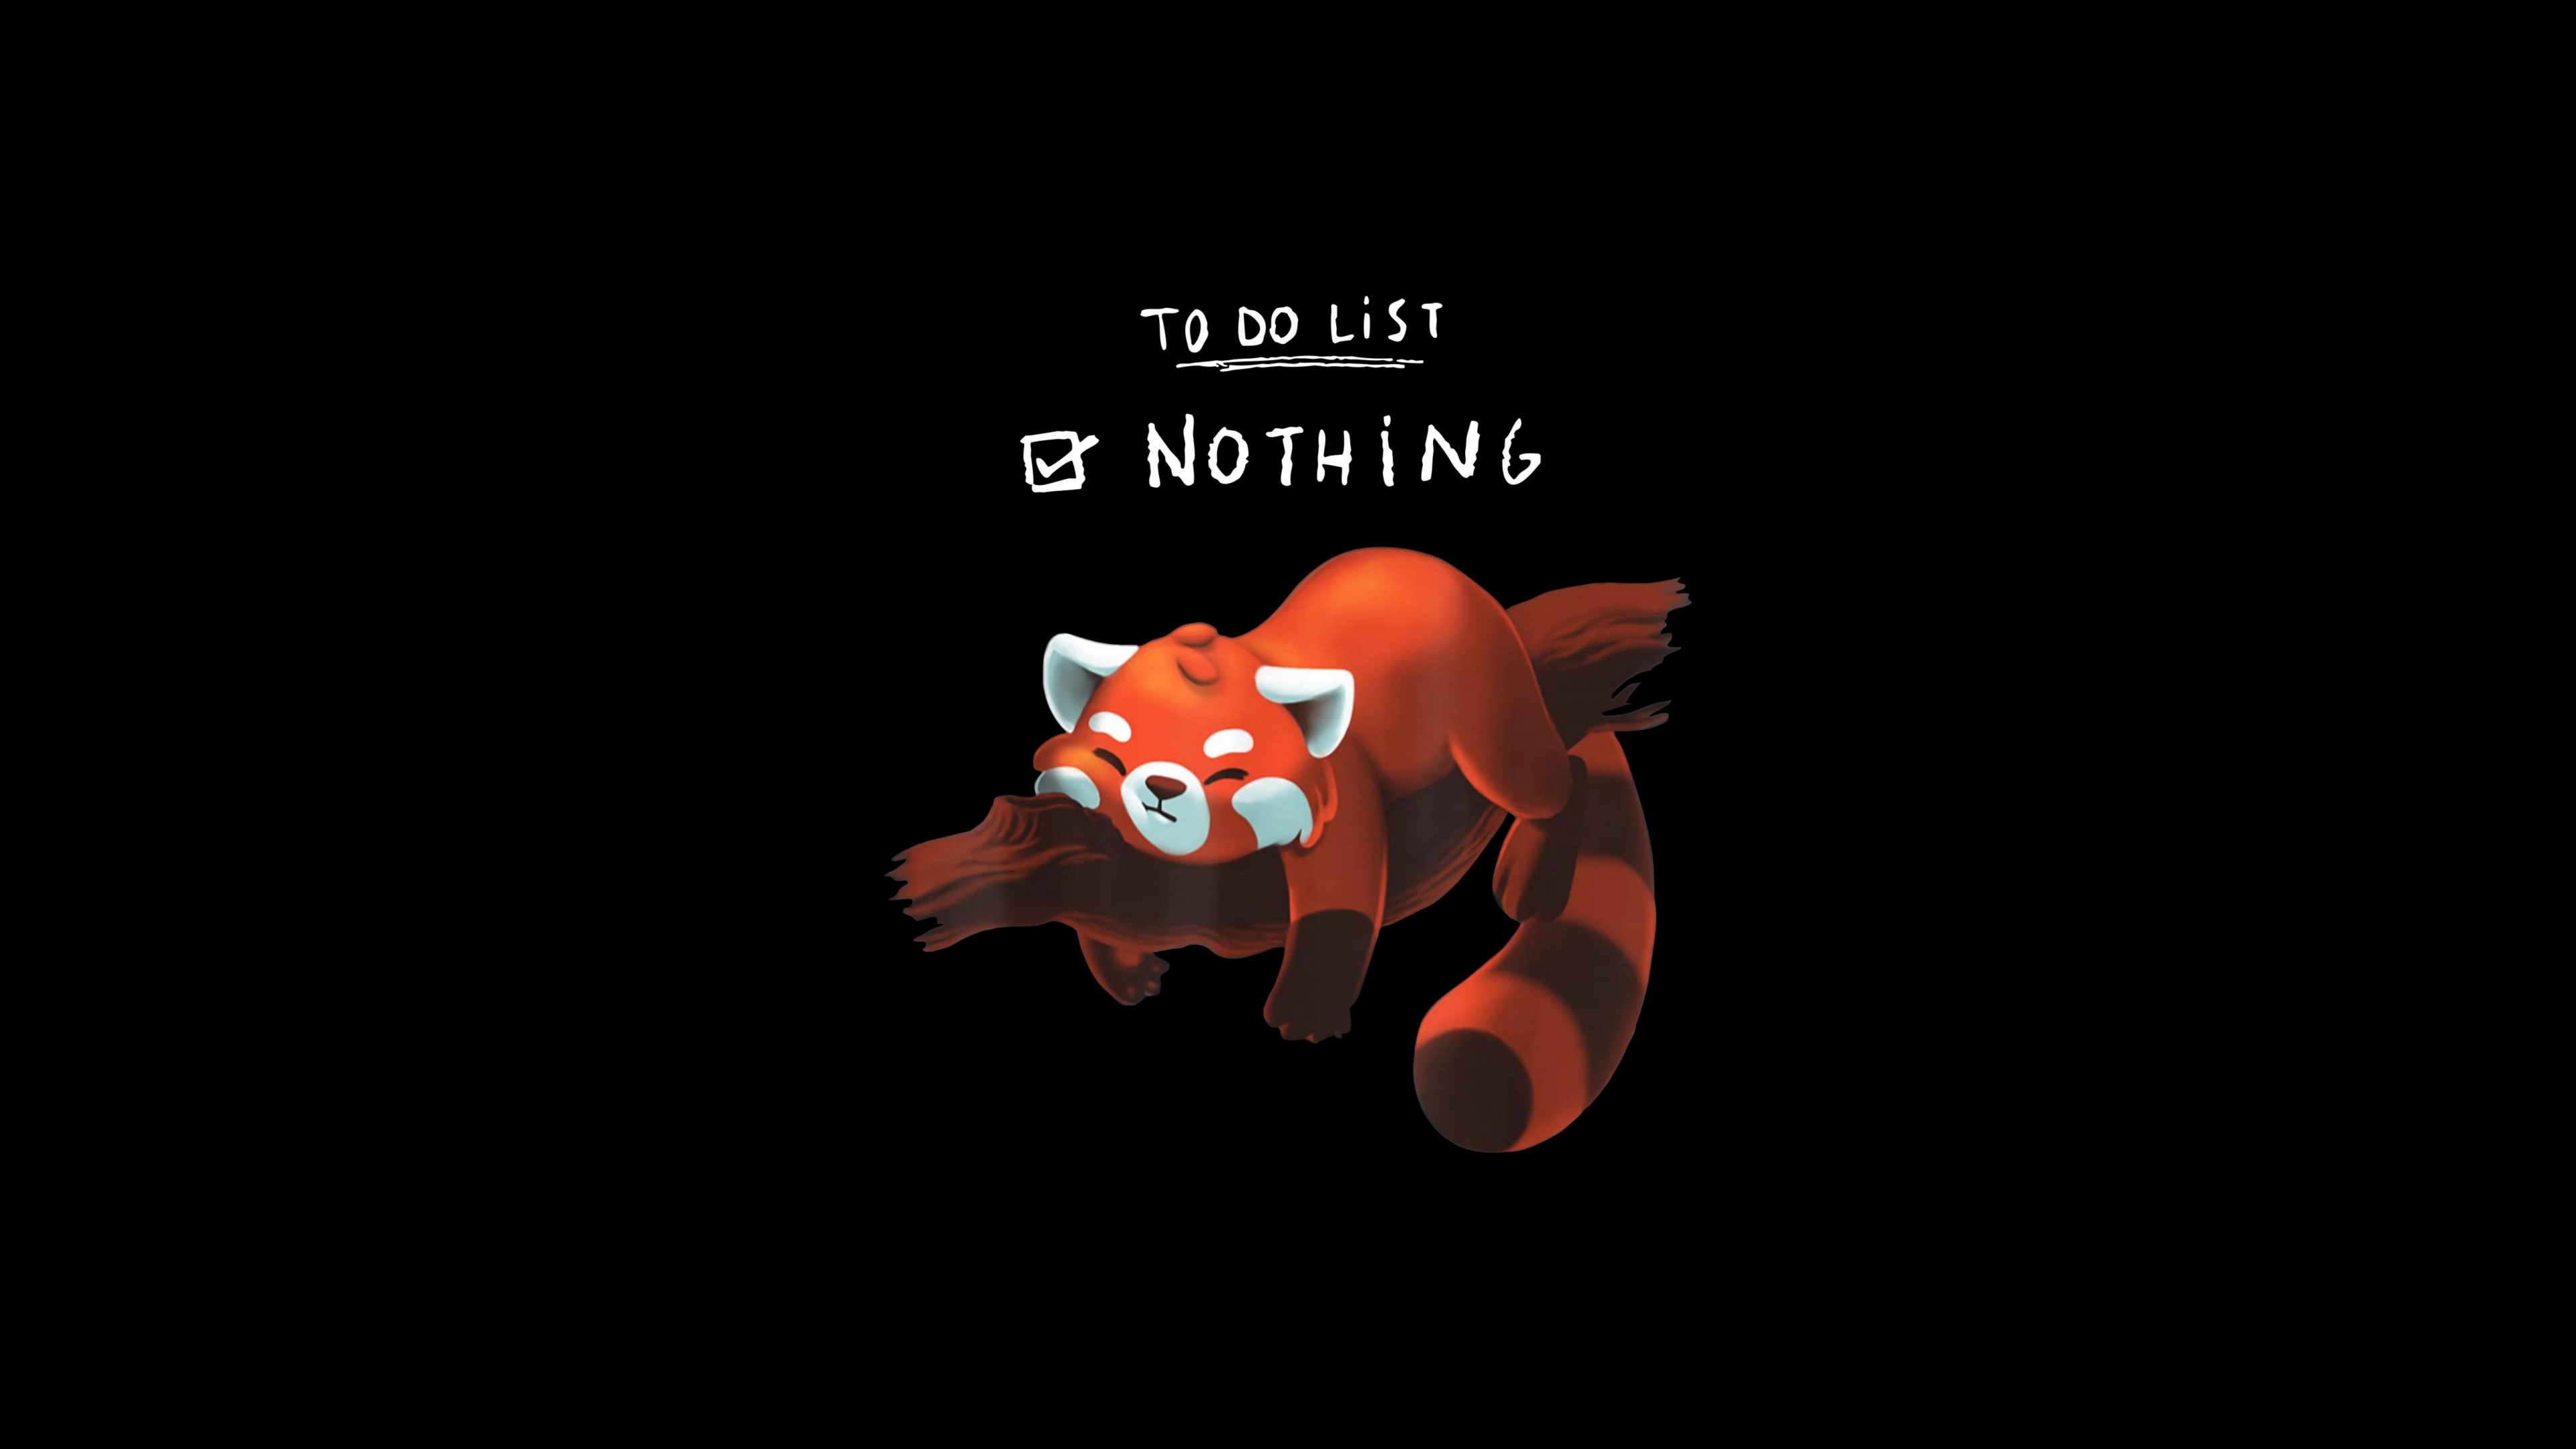 Todo list Wallpaper 4K, Nothing, Red panda, Black/Dark, #10079